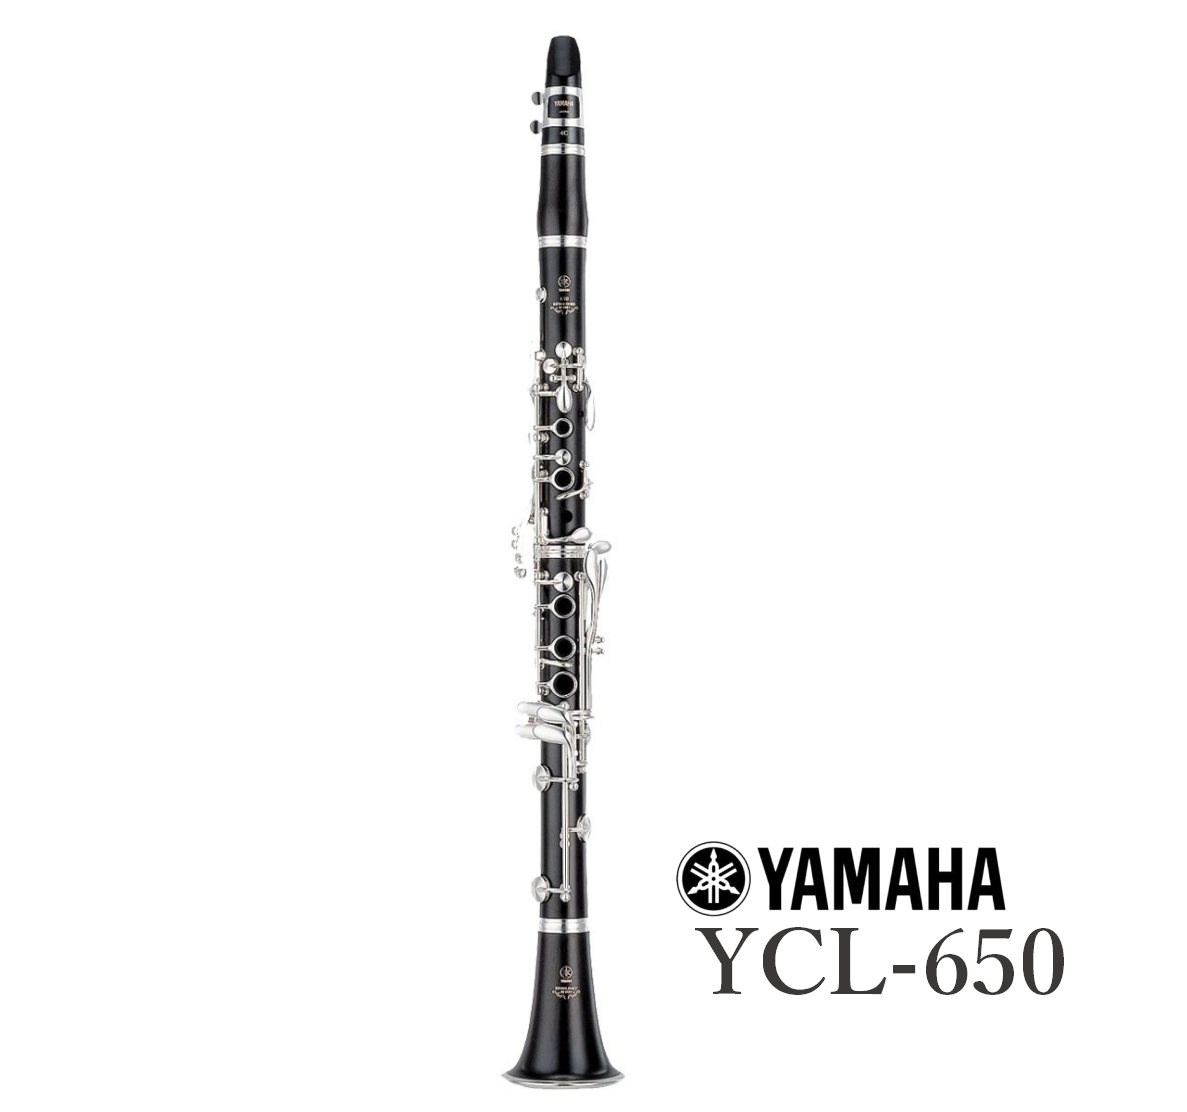 YAMAHAYCL-650